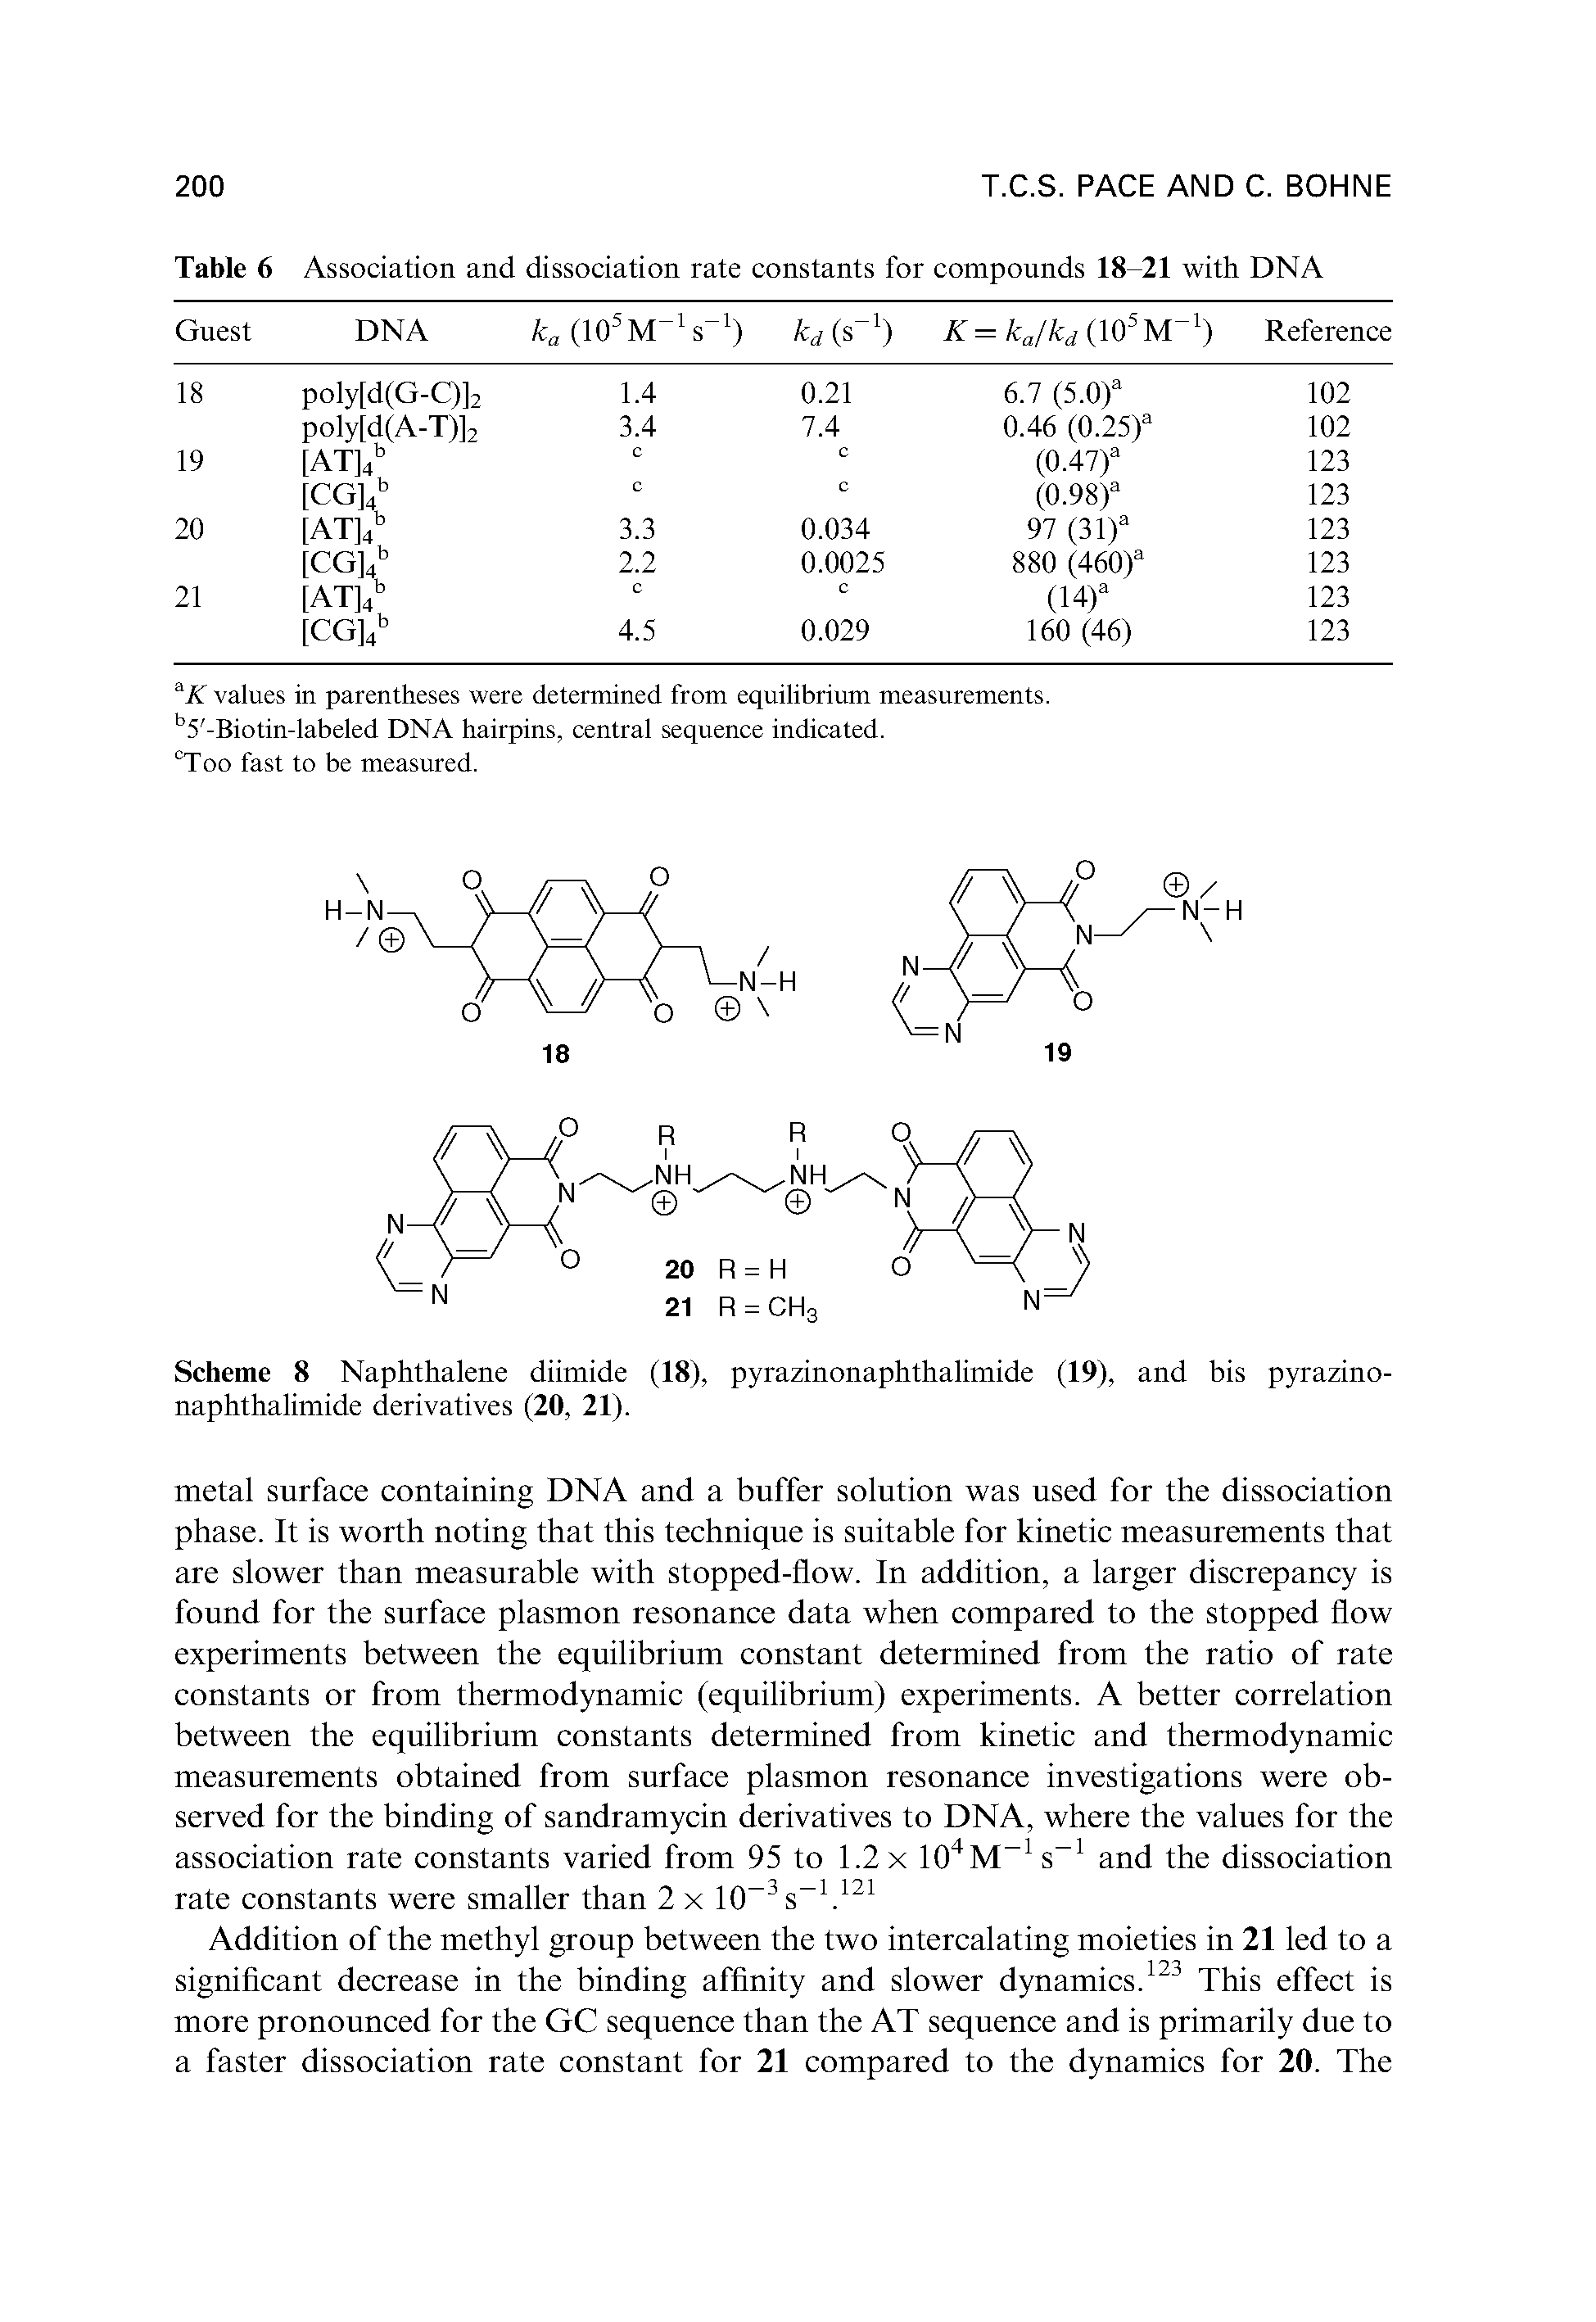 Scheme 8 Naphthalene diimide (18), pyrazinonaphthalimide (19), and bis pyrazino-naphthalimide derivatives (20, 21).